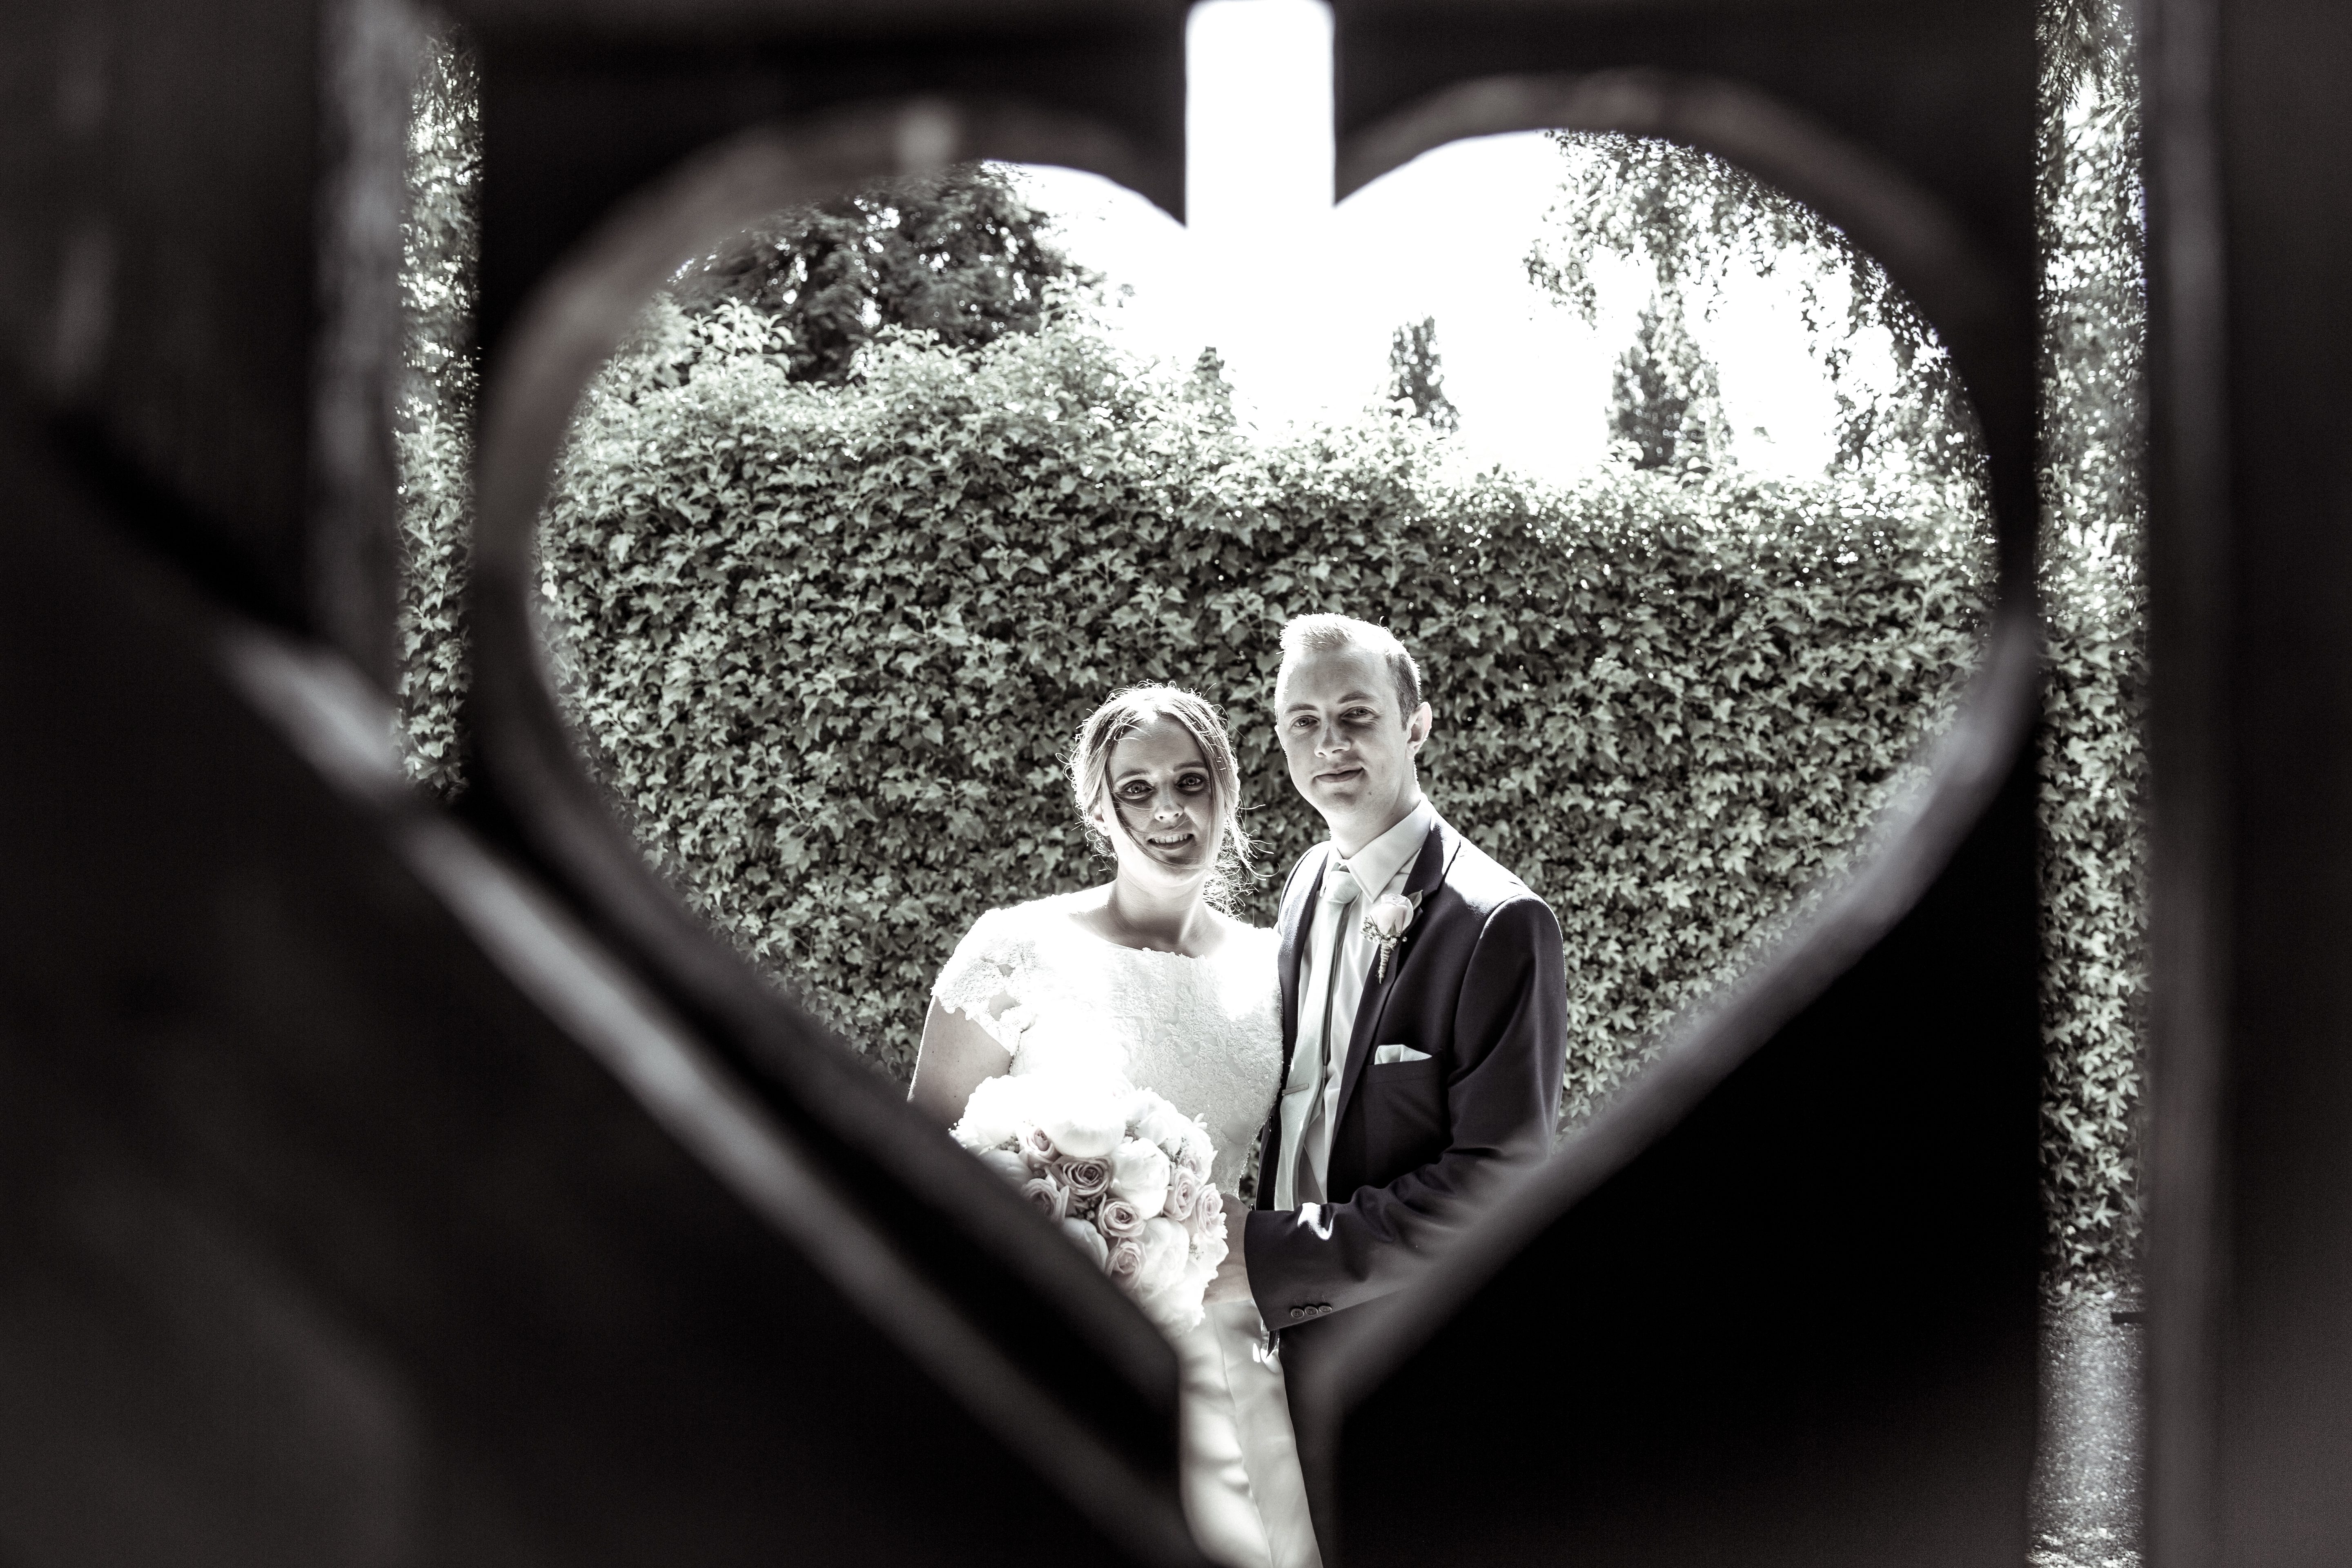 hertfordshire and london wedding photographer, reportage photography.